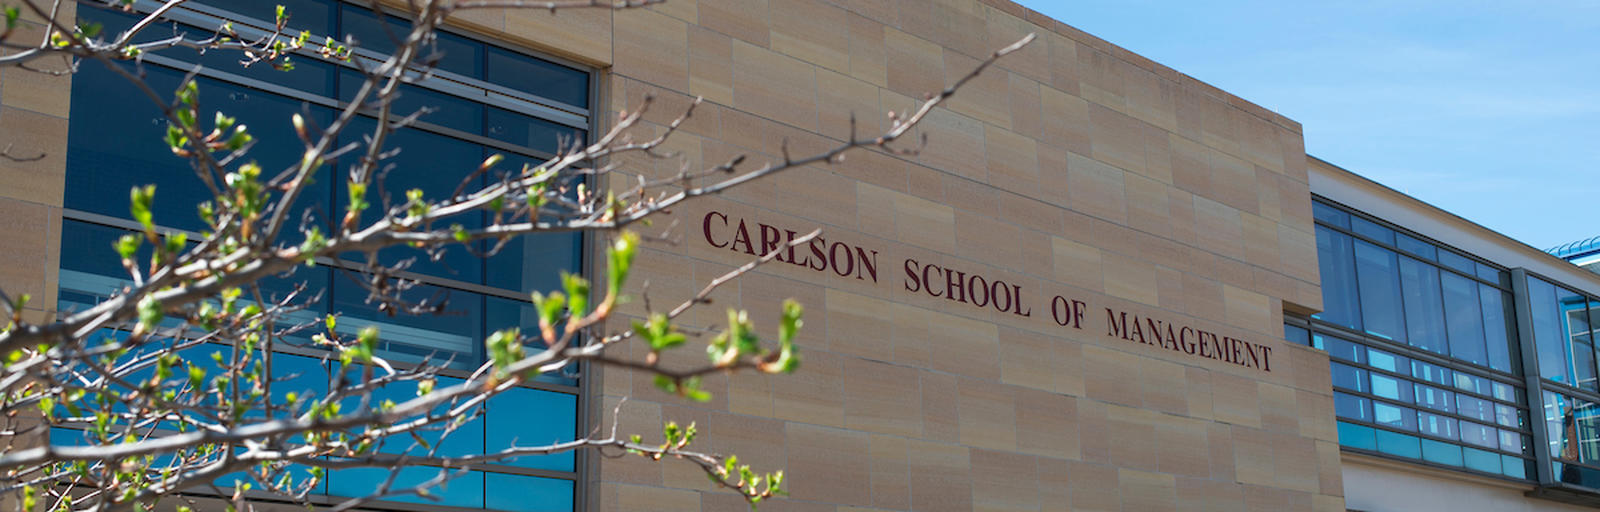 Carlson School building